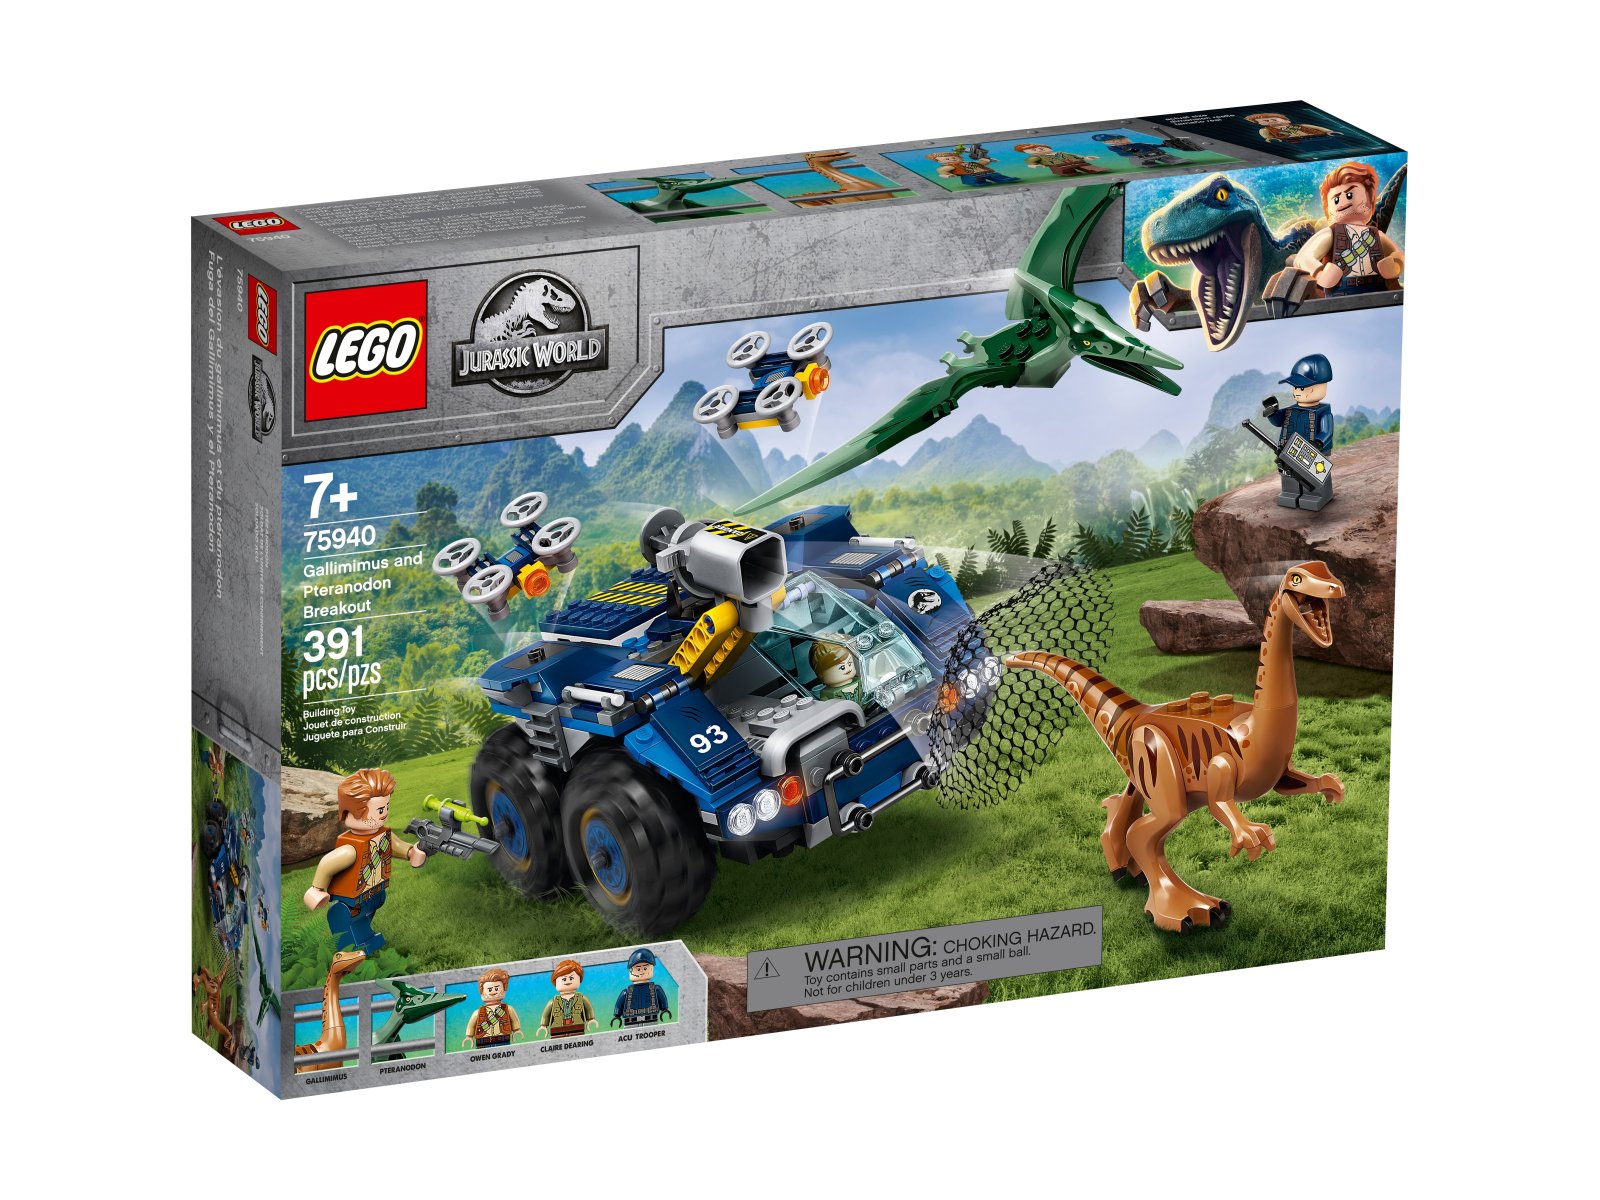 LEGO Jurassic World Gallimim i pteranodon: ucieczka 75940